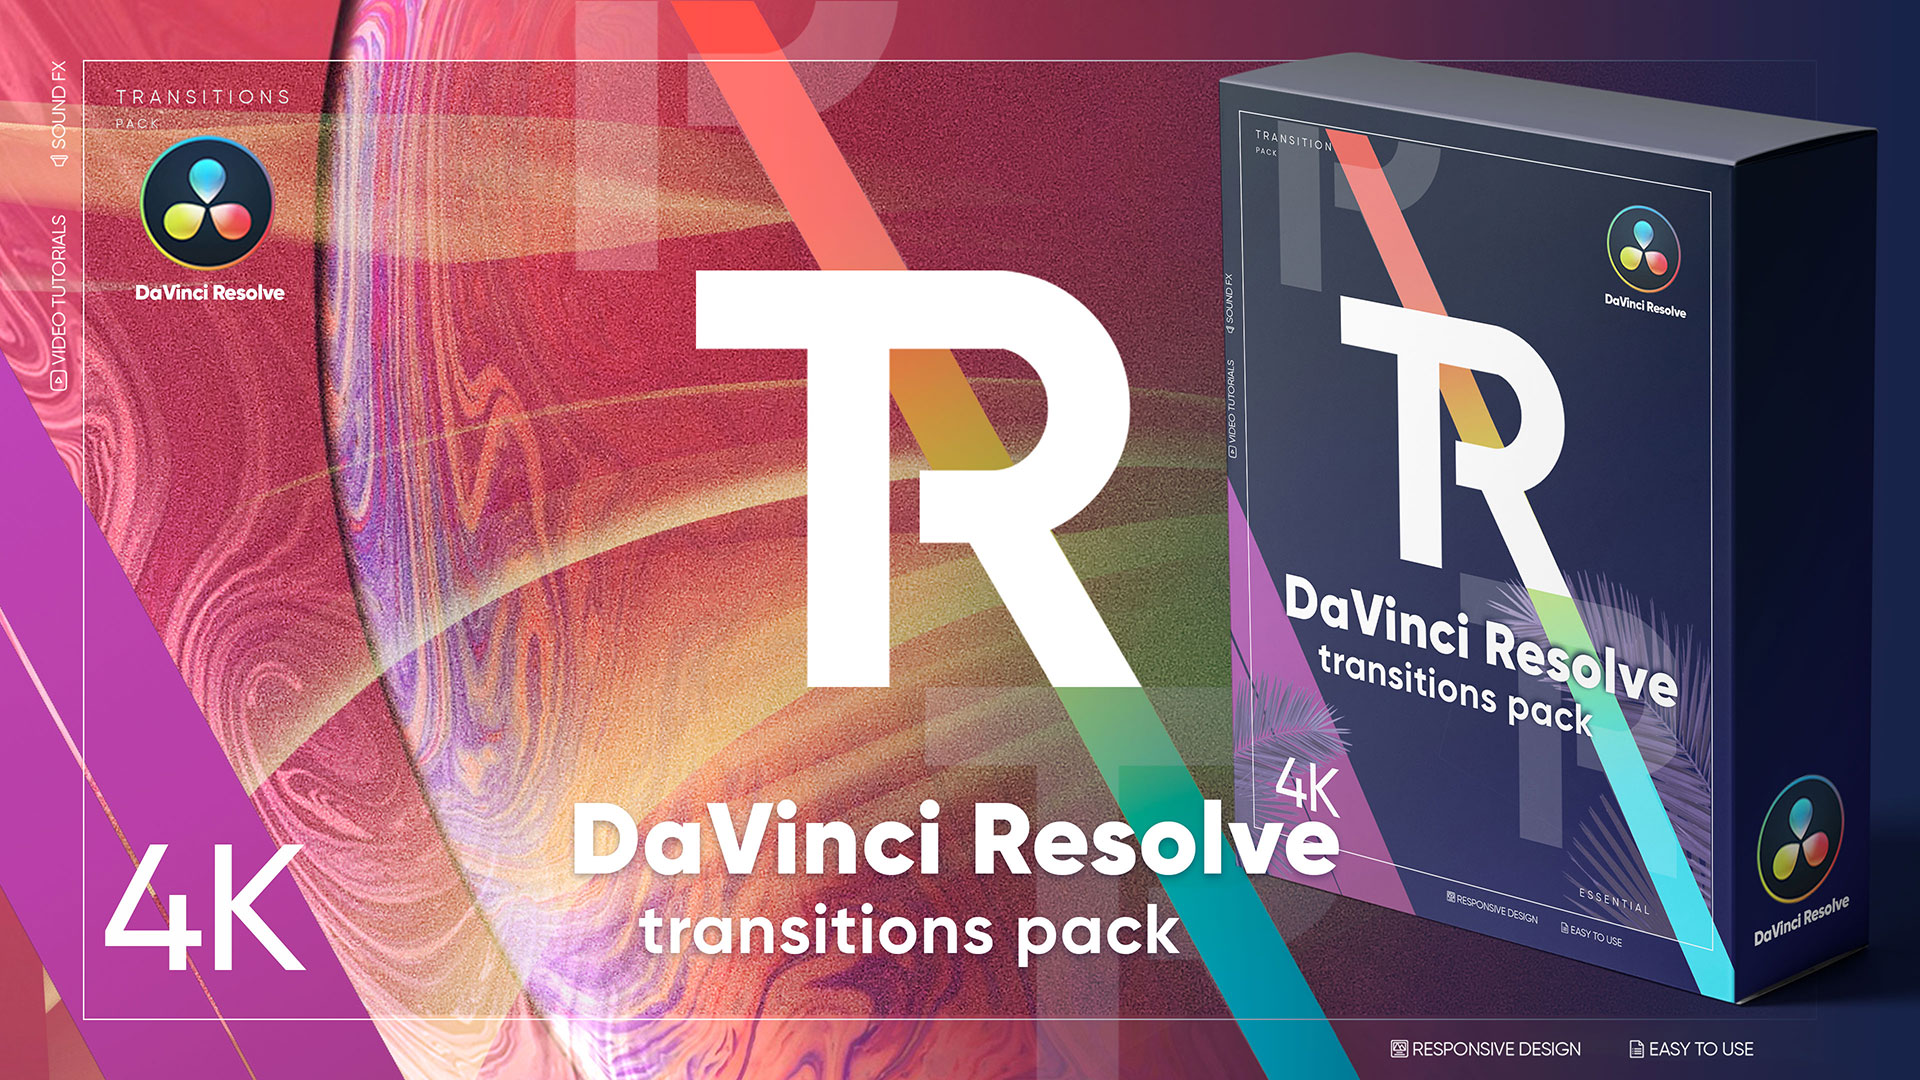 davinci resolve 15 free transitions